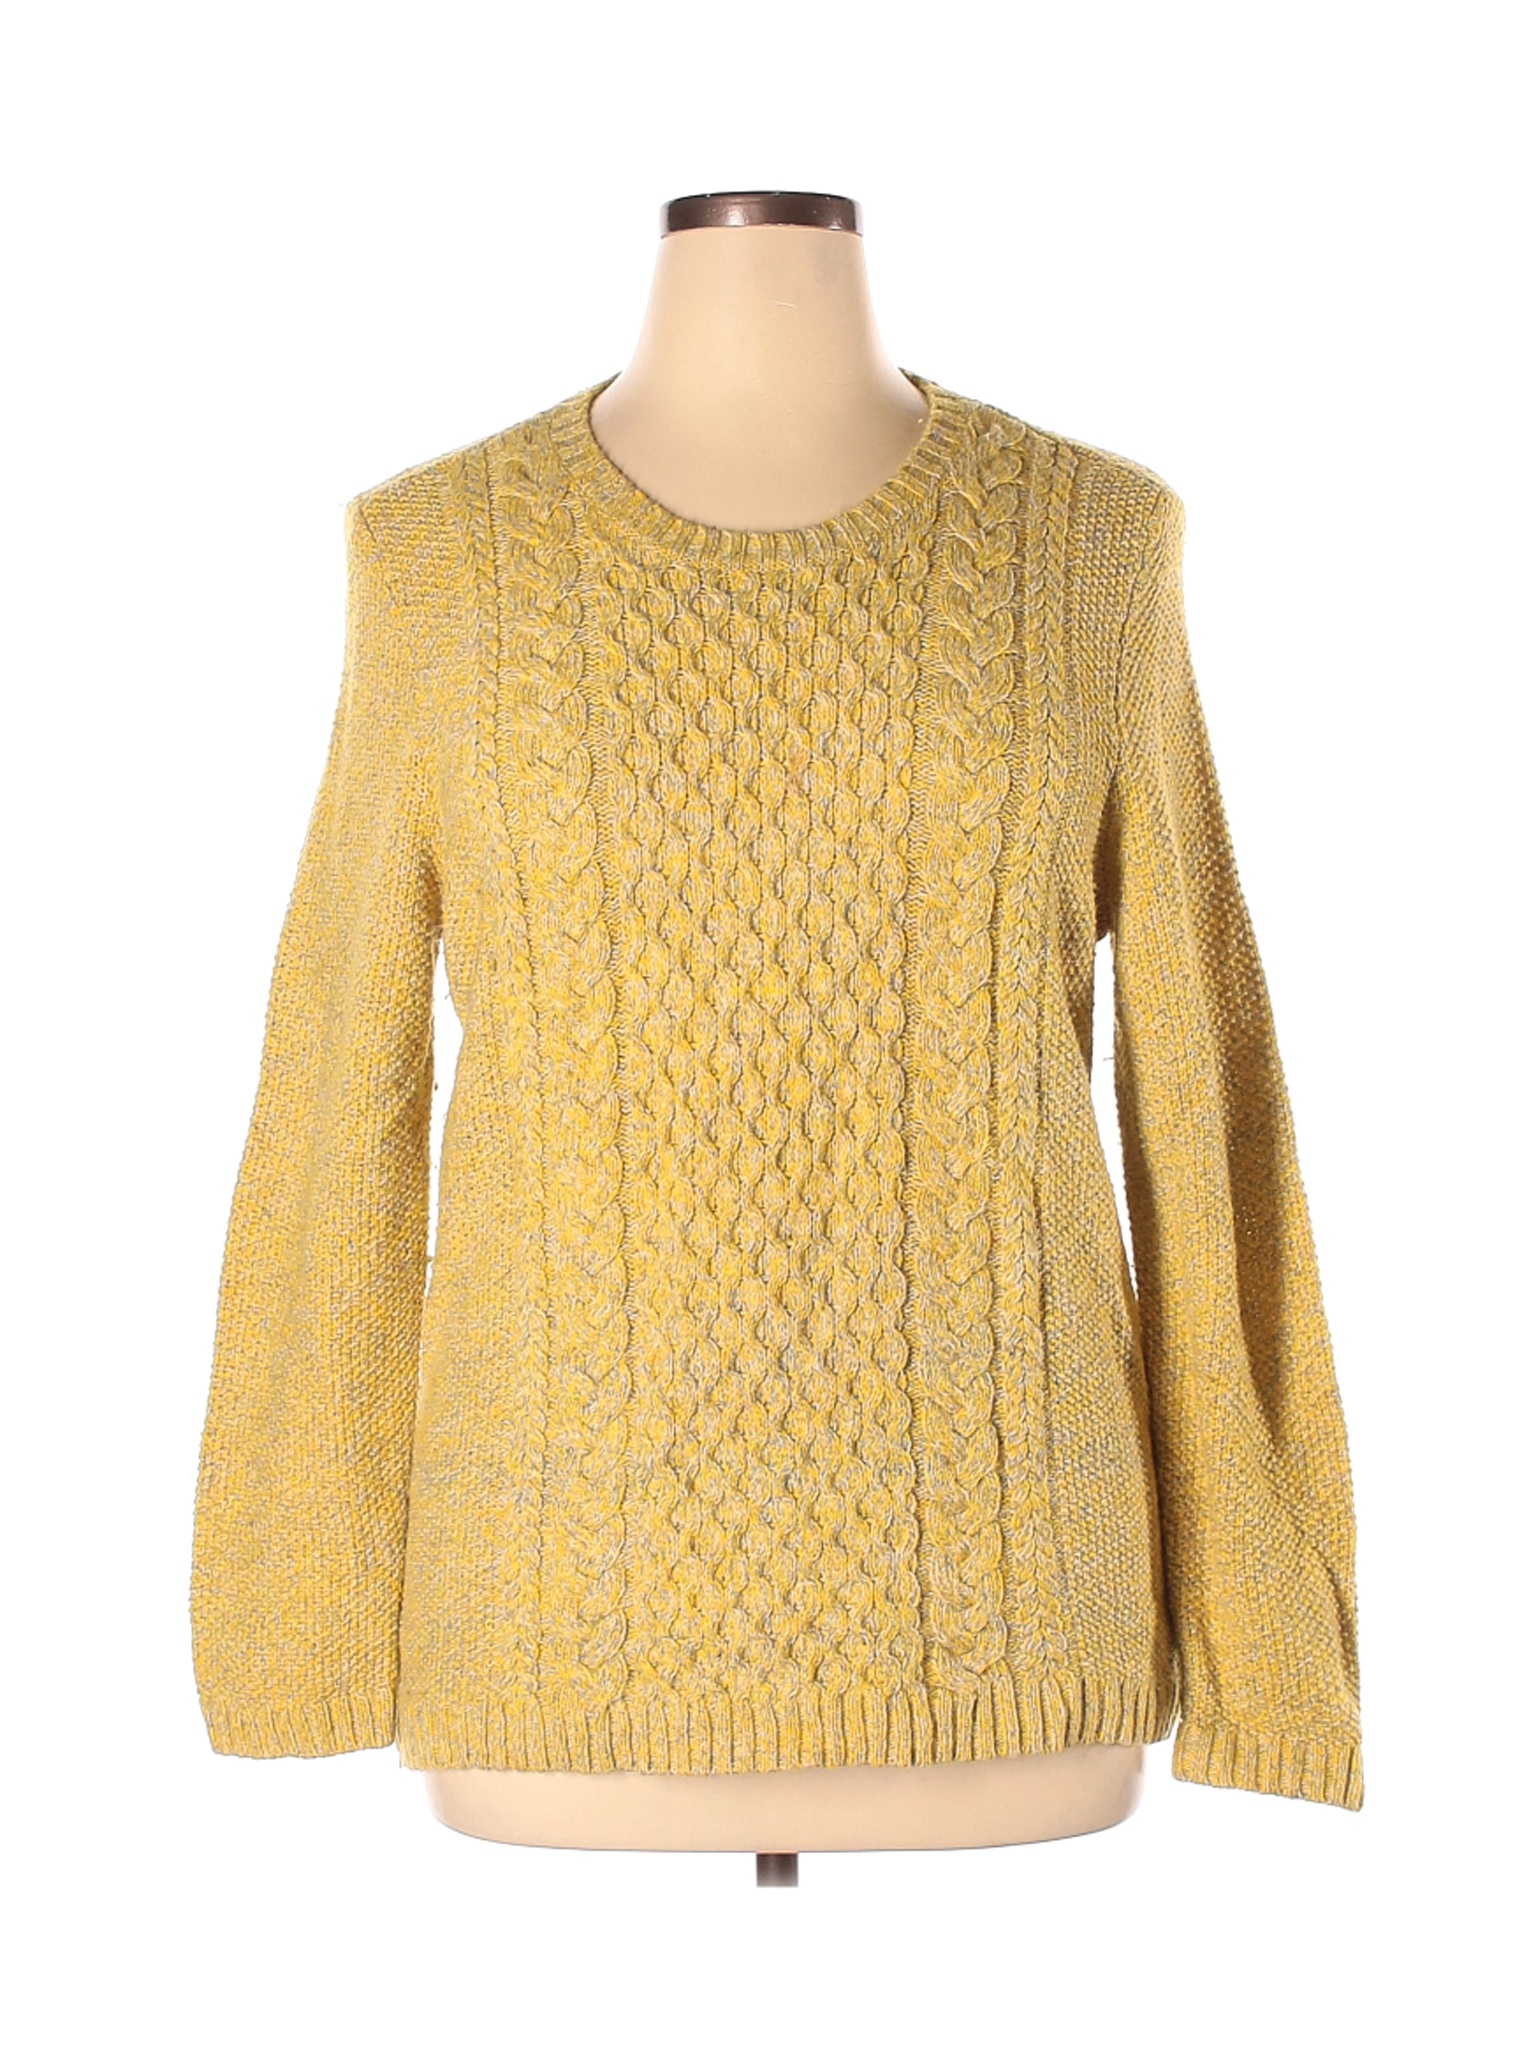 Talbots Women Yellow Pullover Sweater XL | eBay